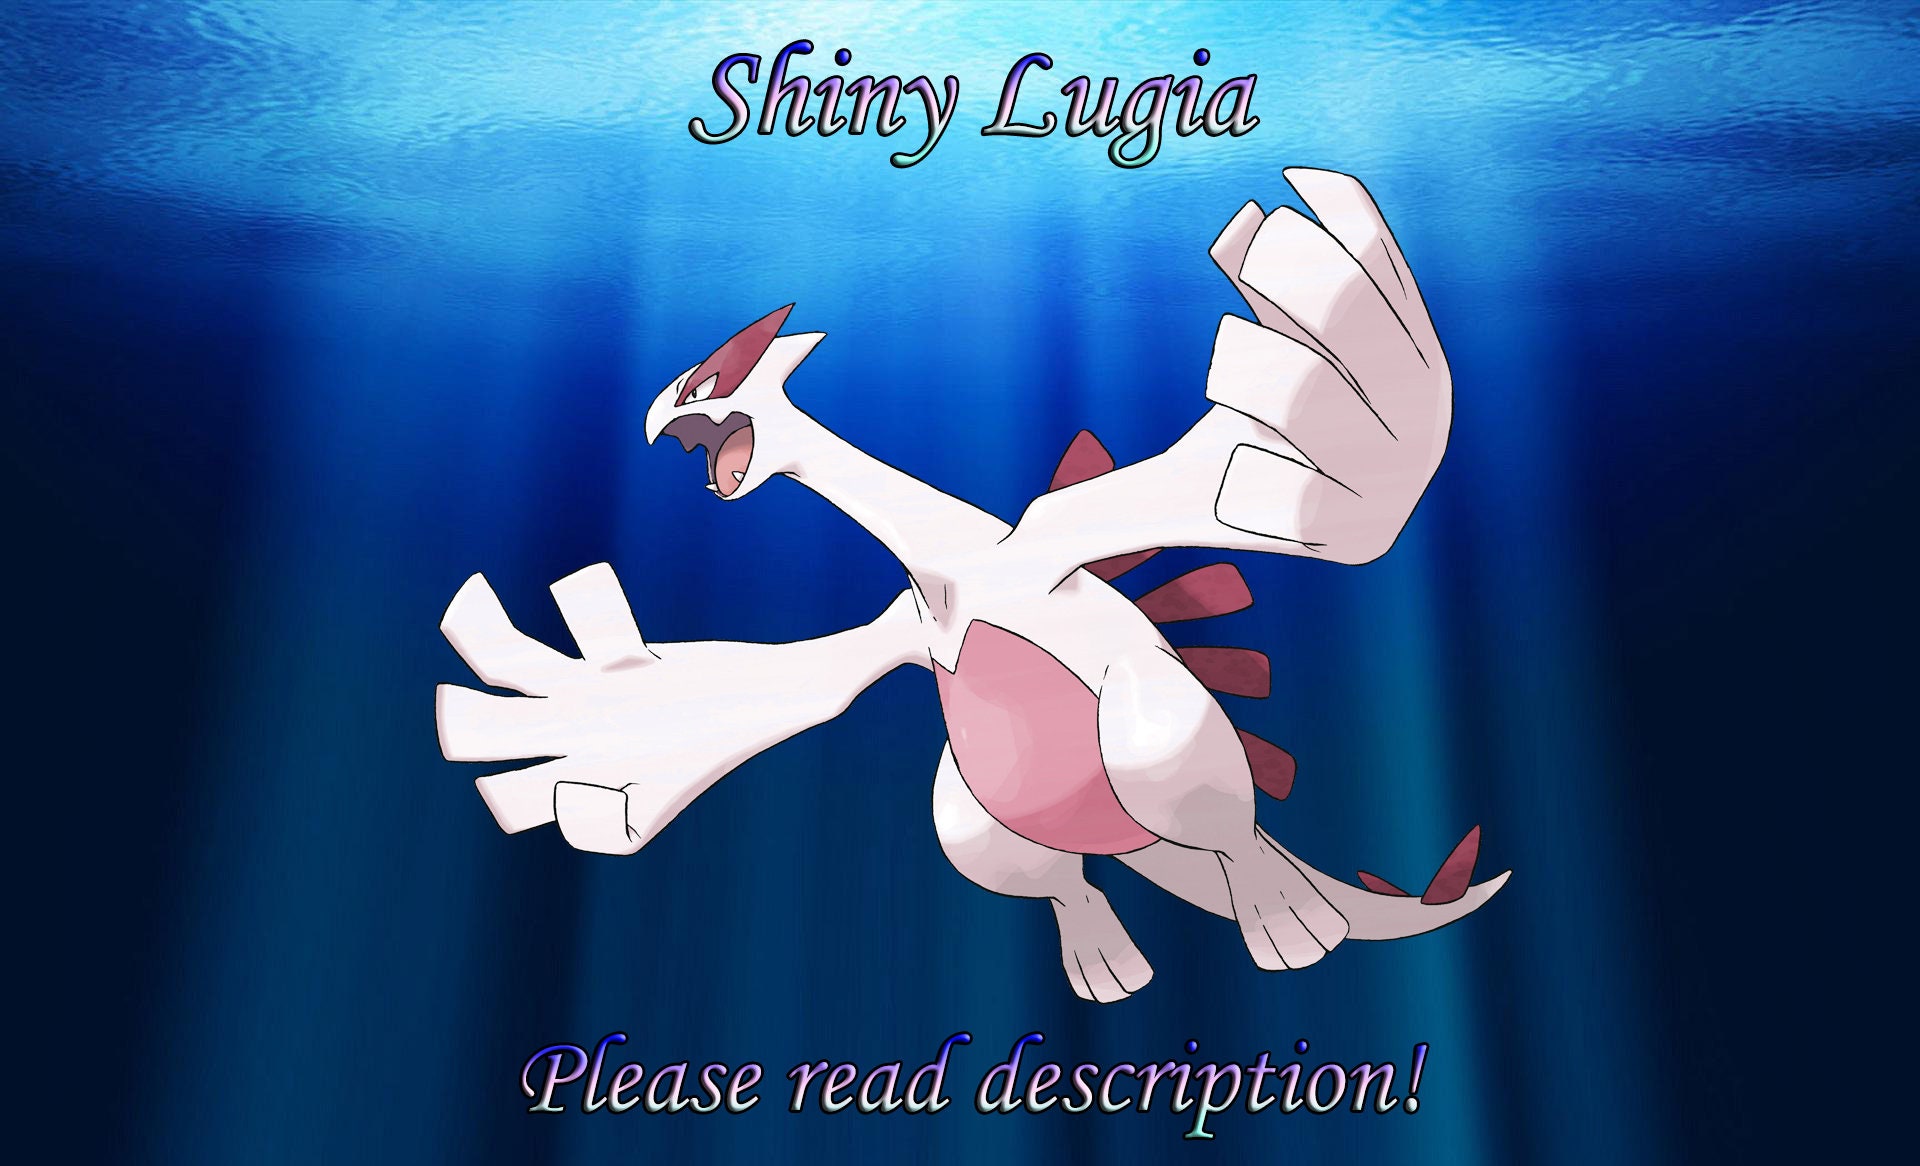 Pokemon Sword Shield ✨ SHINY ✨ 1 LEVEL LUGIA LEGENDARY 6IV FAST